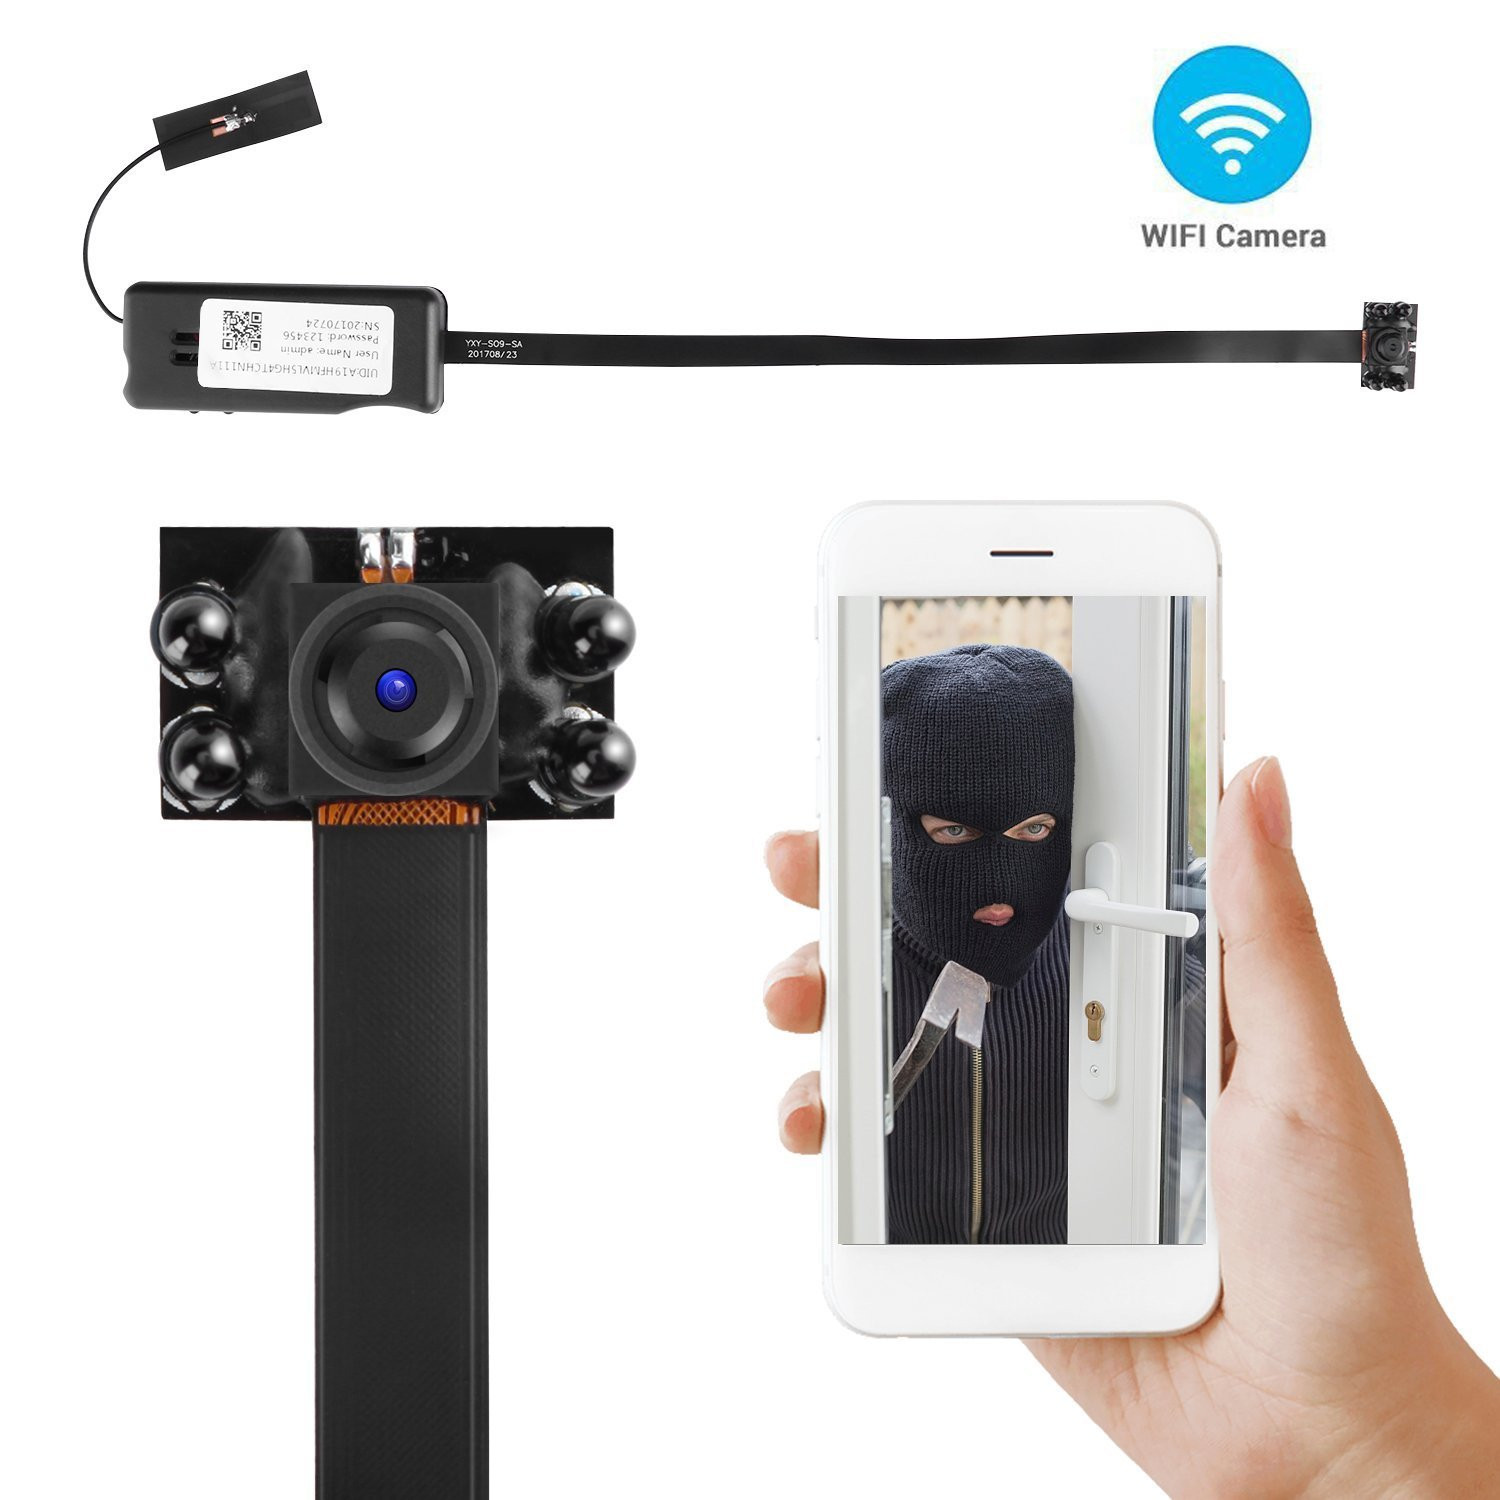 Best ideas about DIY Spy Camera
. Save or Pin Night Vision HD 1080P WIFI Hidden Spy Camera ALON DIY Now.